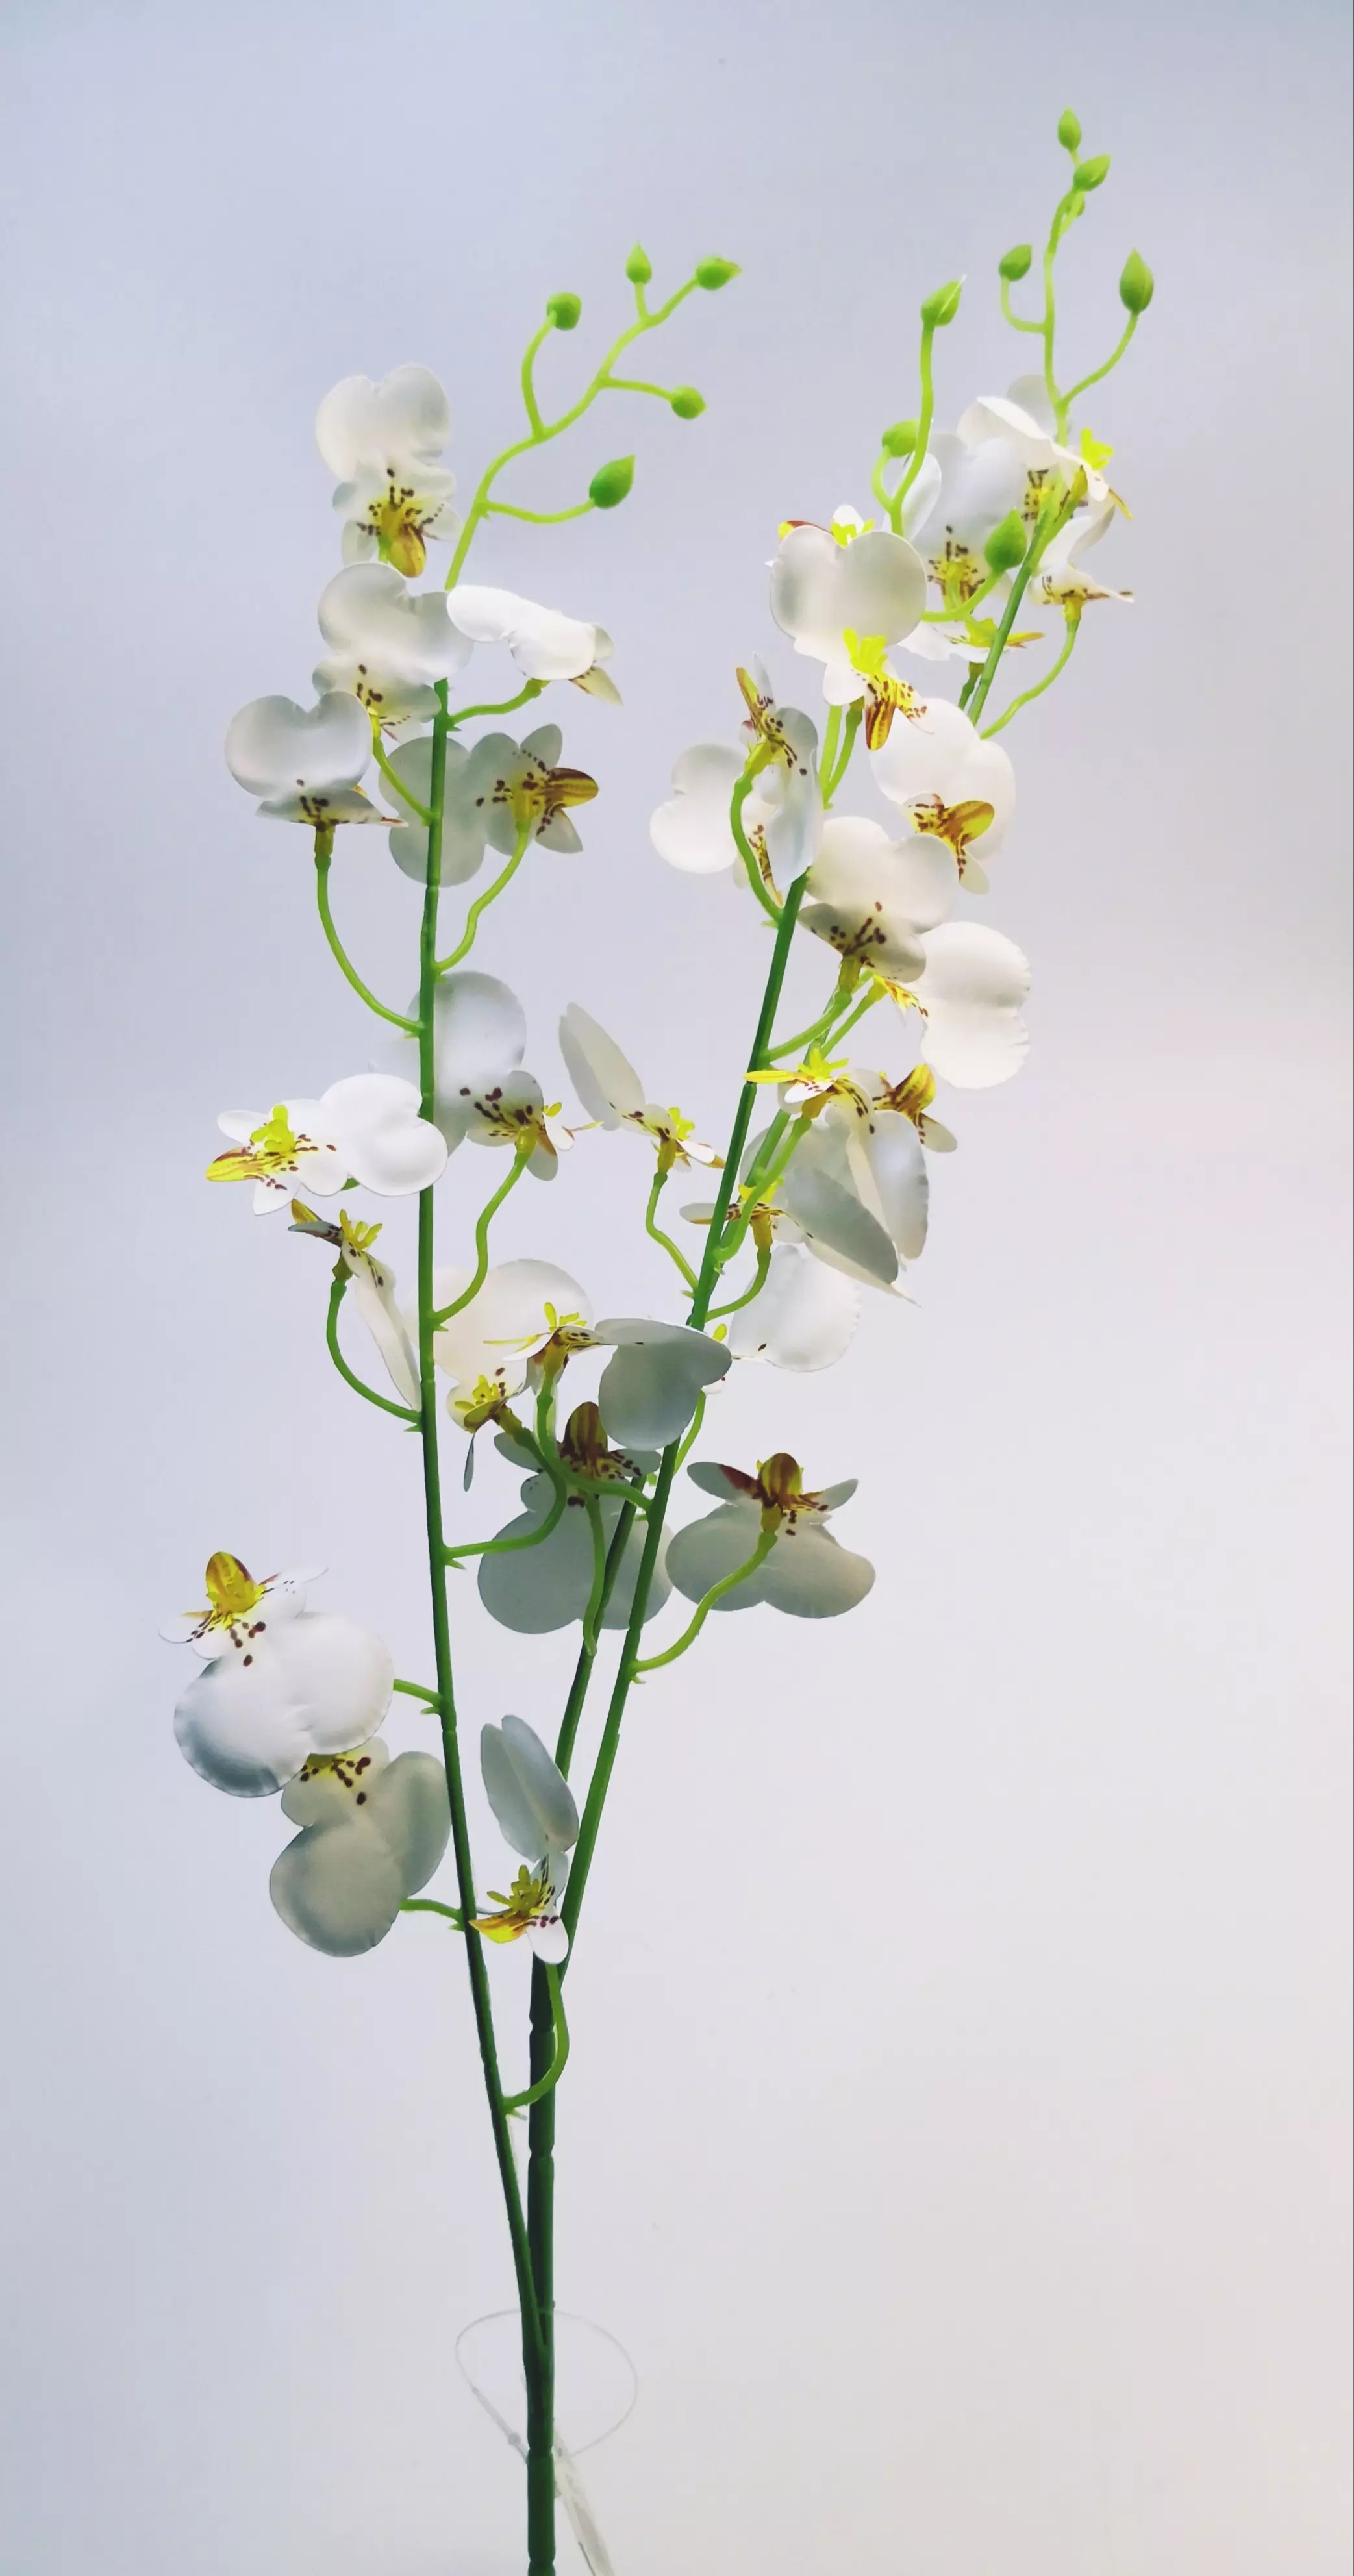 Gumi orchidea kis virágú 85 cm 32 virág 3-4 cm Fehér cirmos 